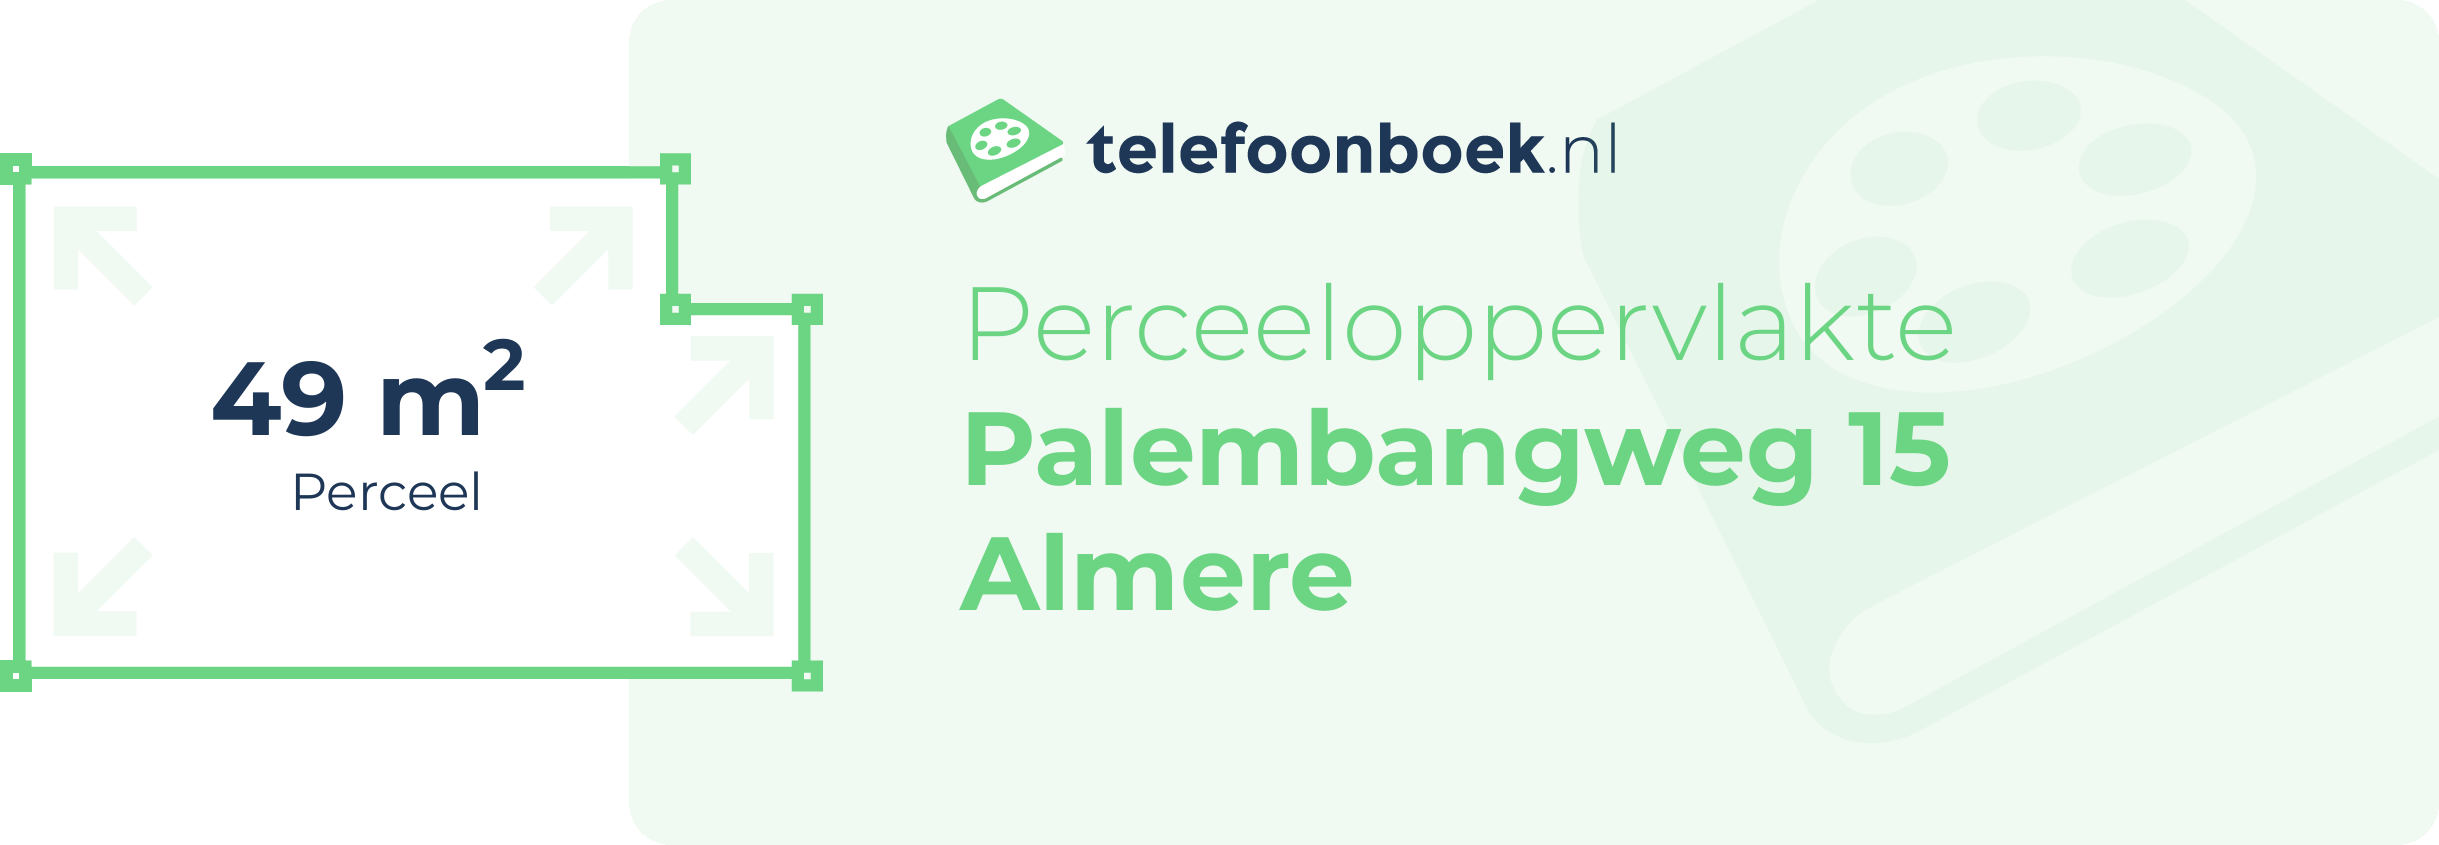 Perceeloppervlakte Palembangweg 15 Almere